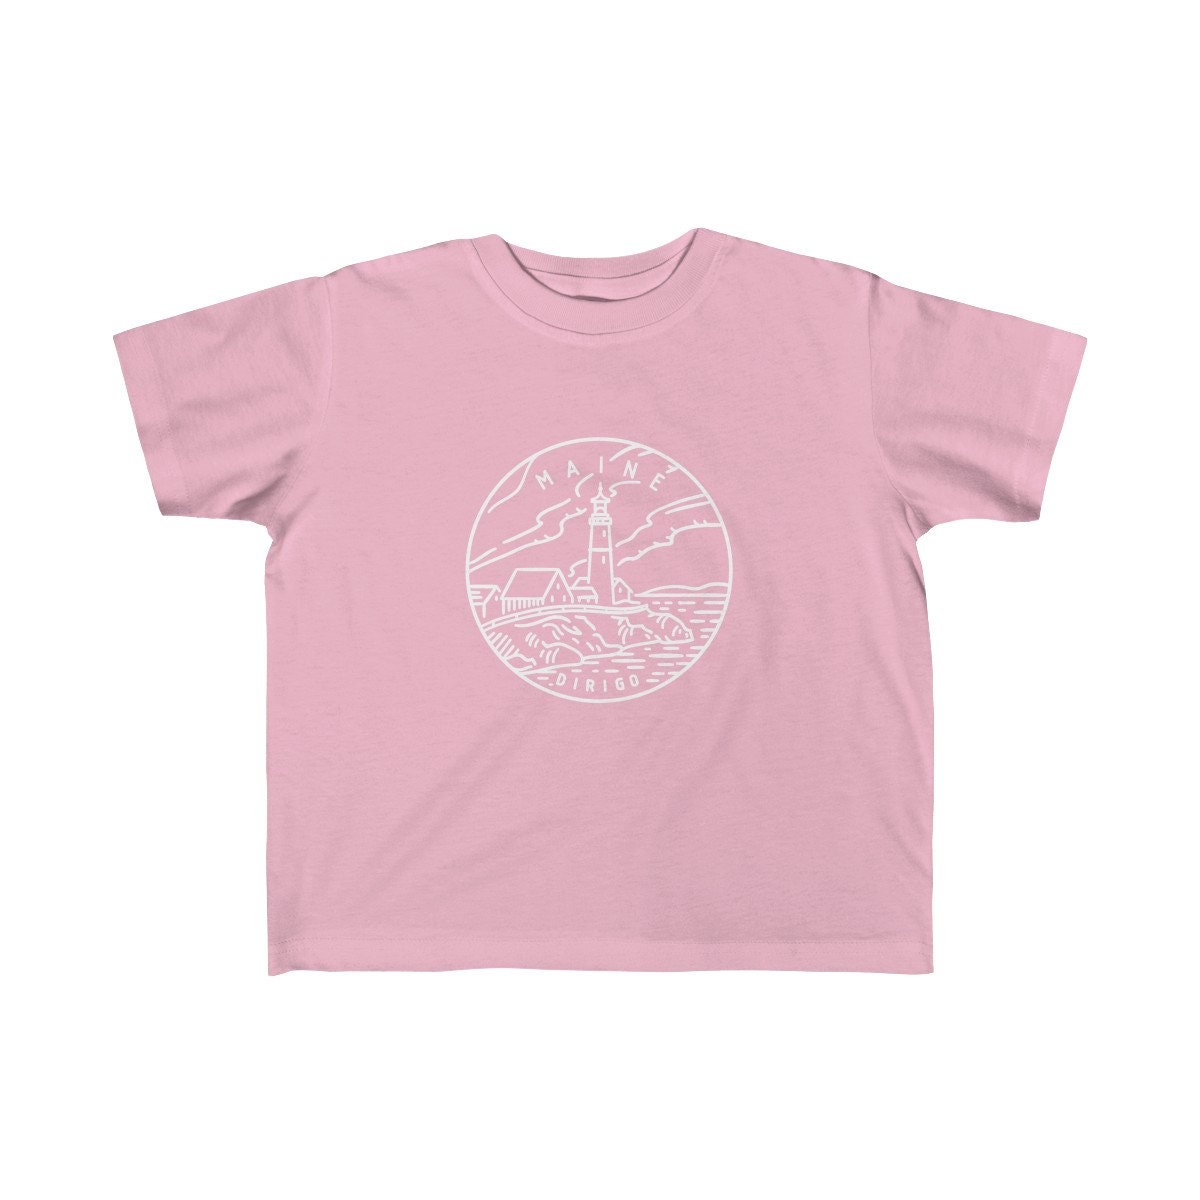 Maine Toddler Shirt Maine State Design Kid's T-shirt - Etsy